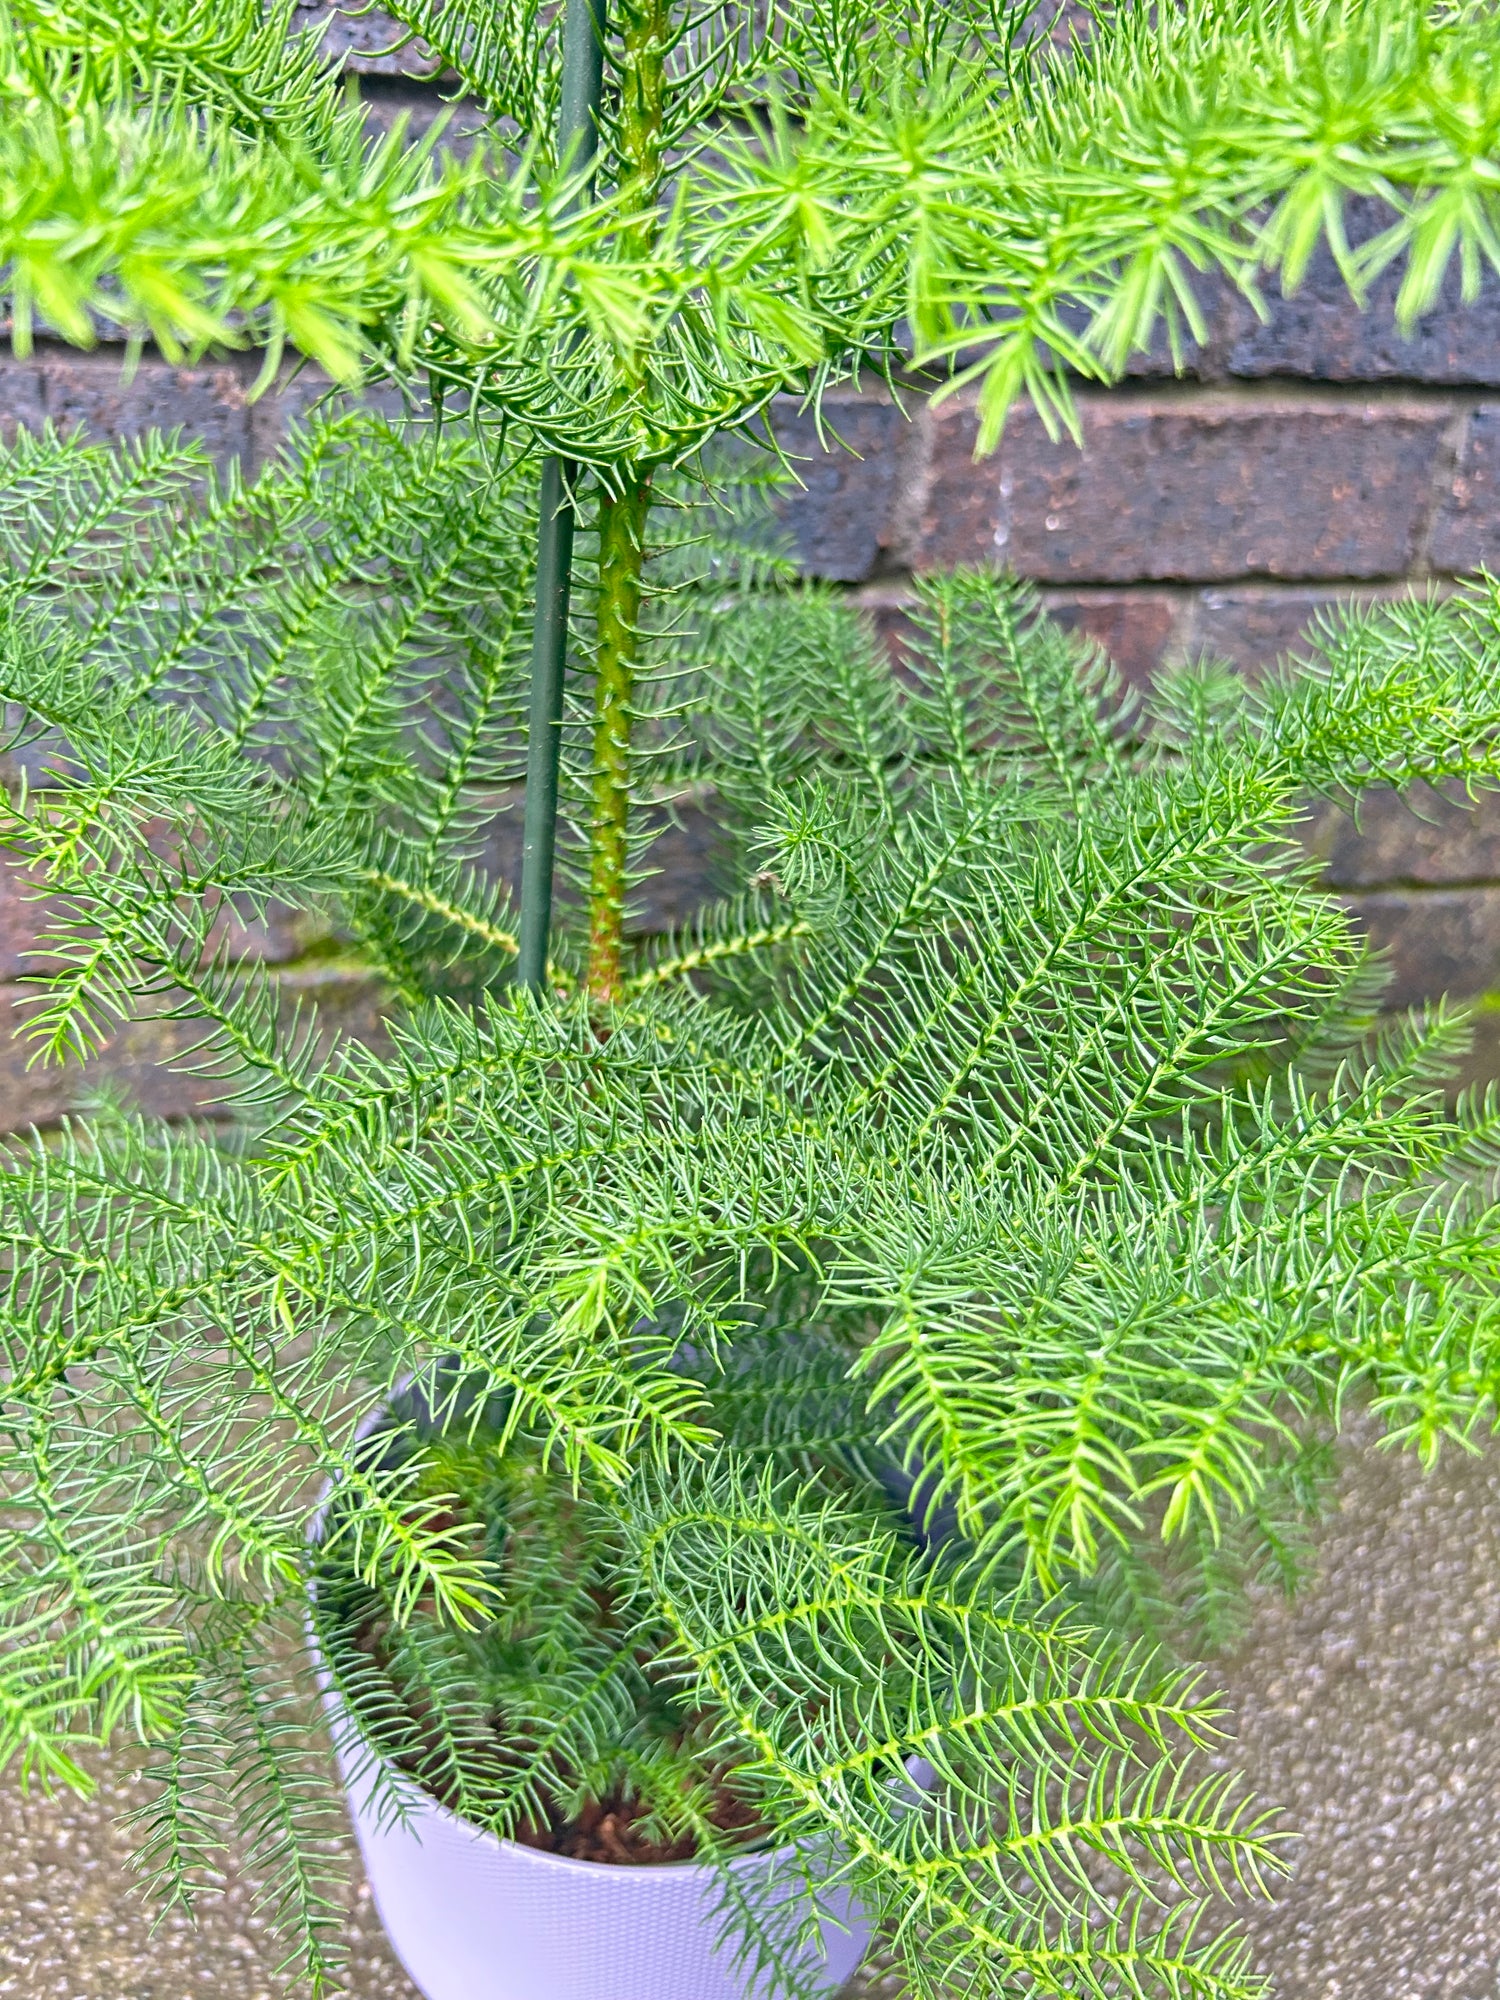 Araucaria heterophylla - Norfolk Pine